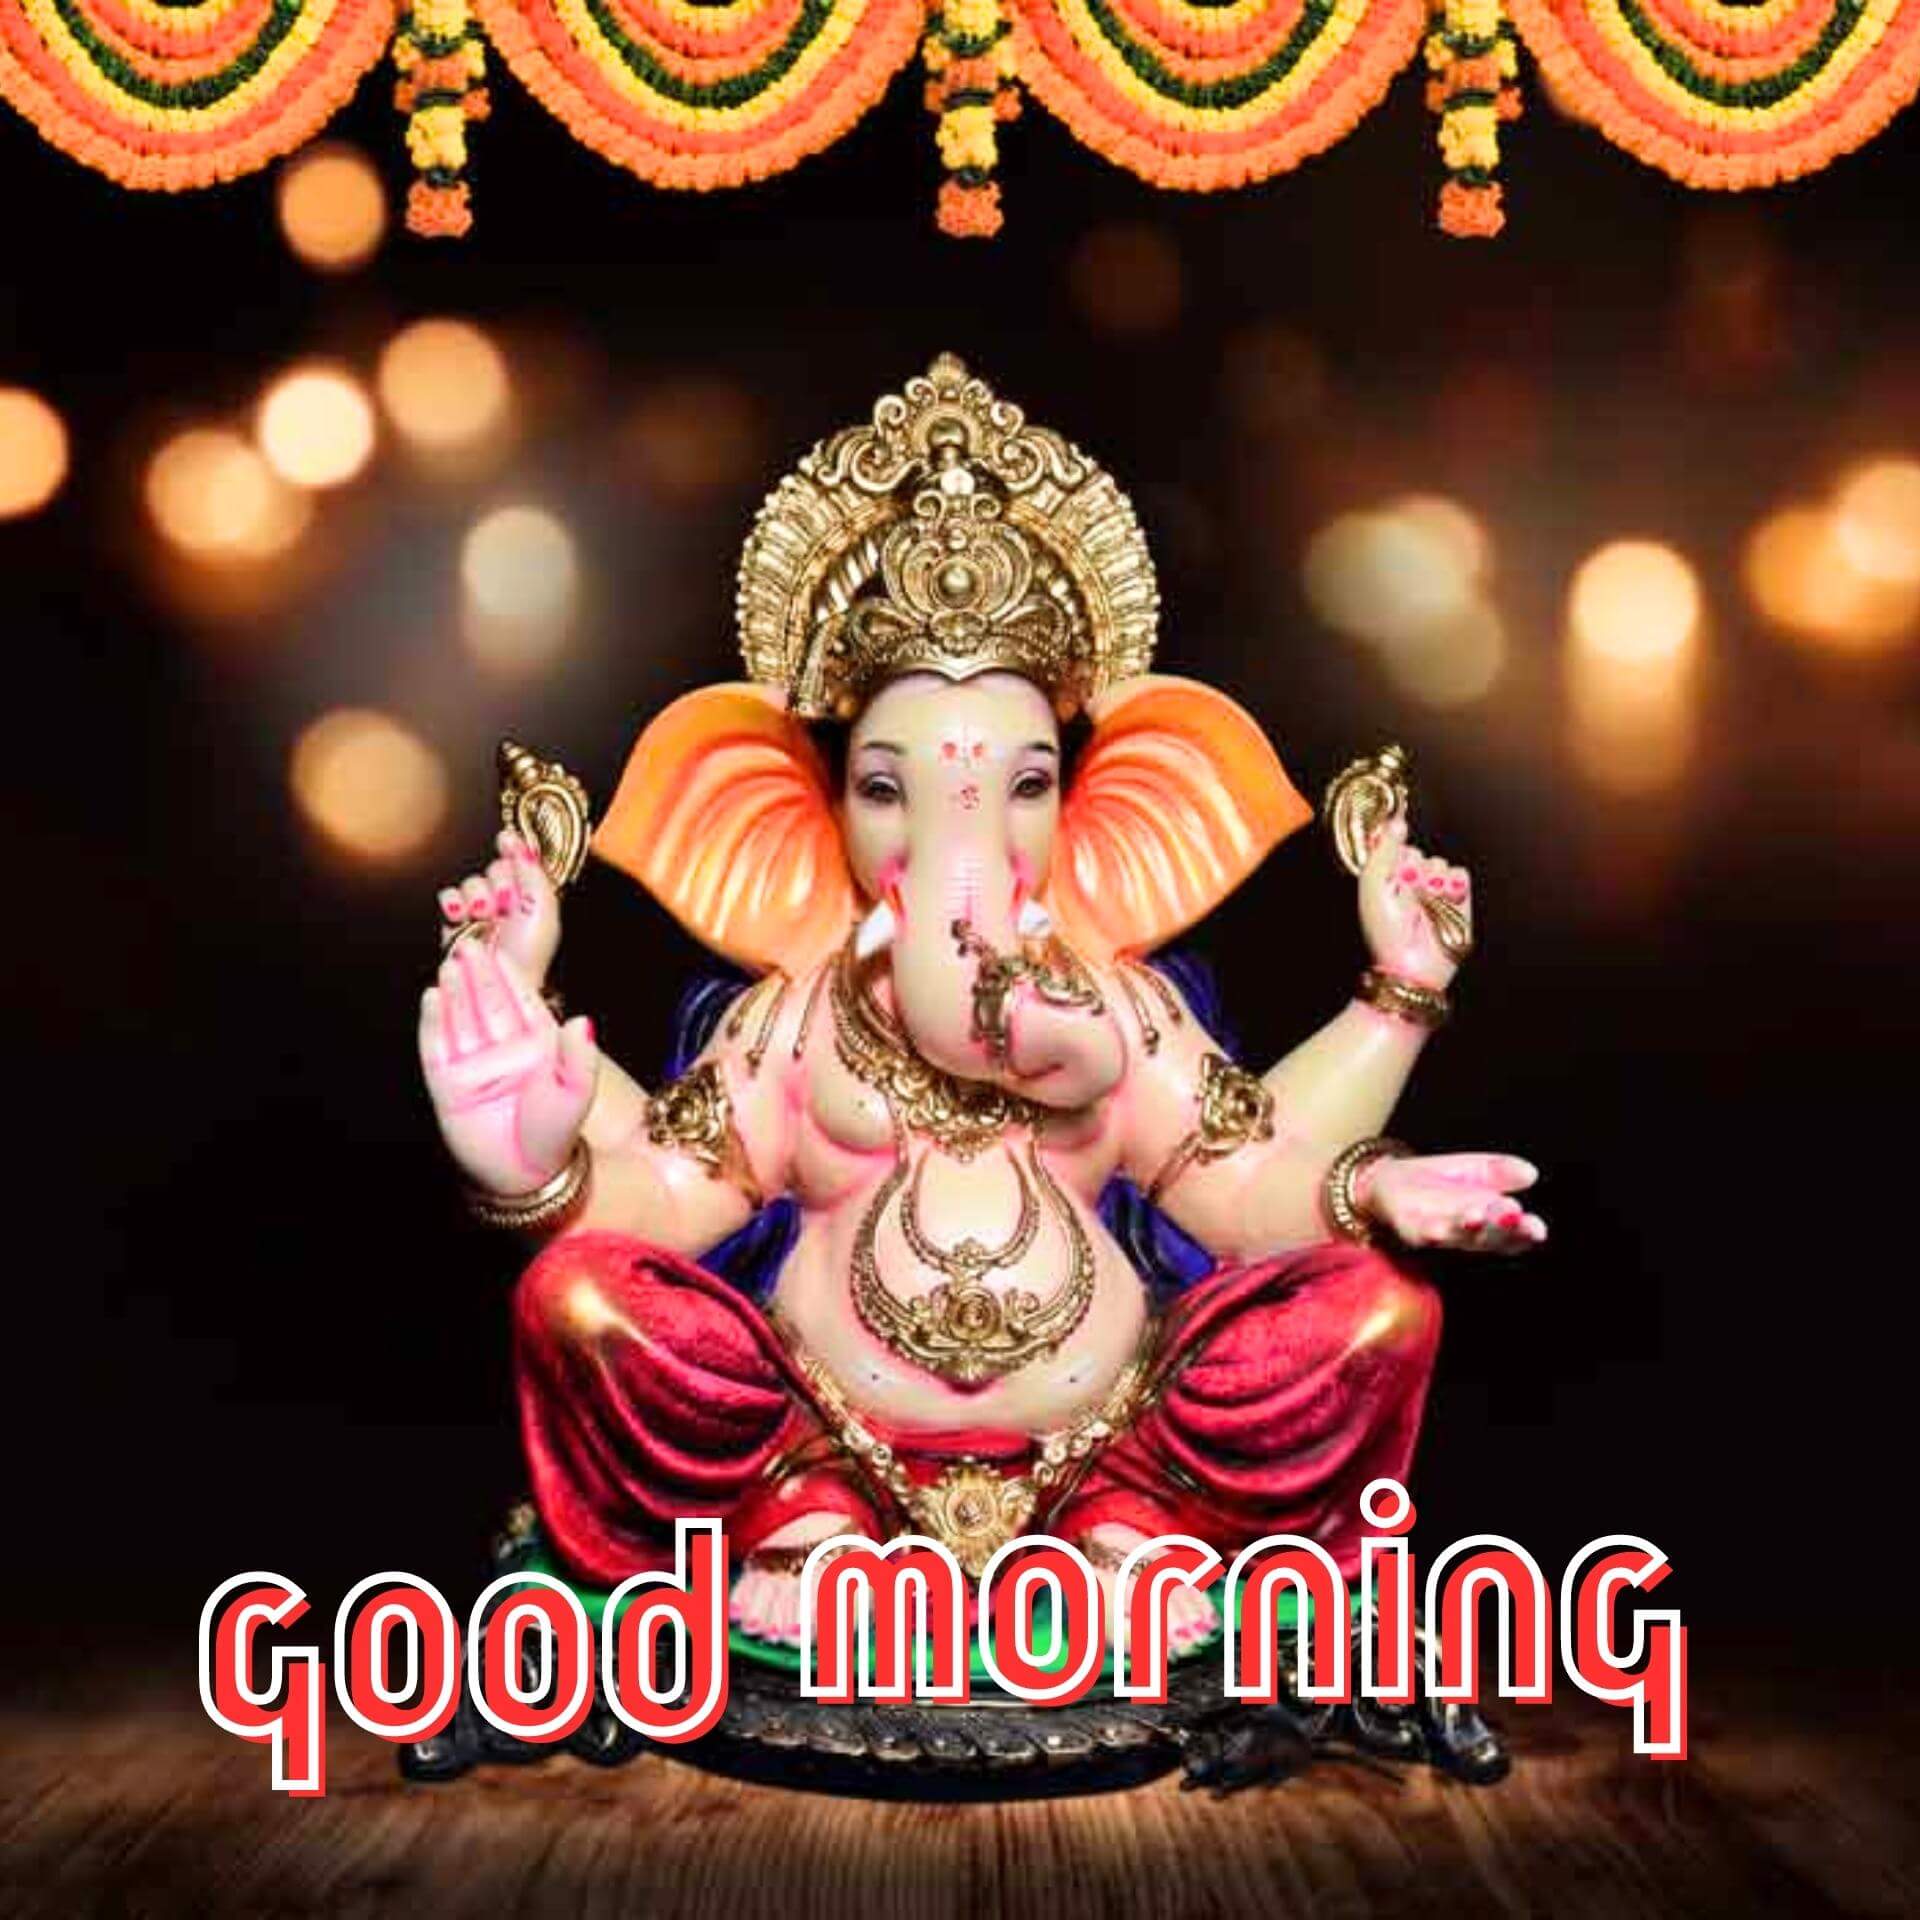 Hanuman Ji Good Morning Pictures Free for Whatsapp